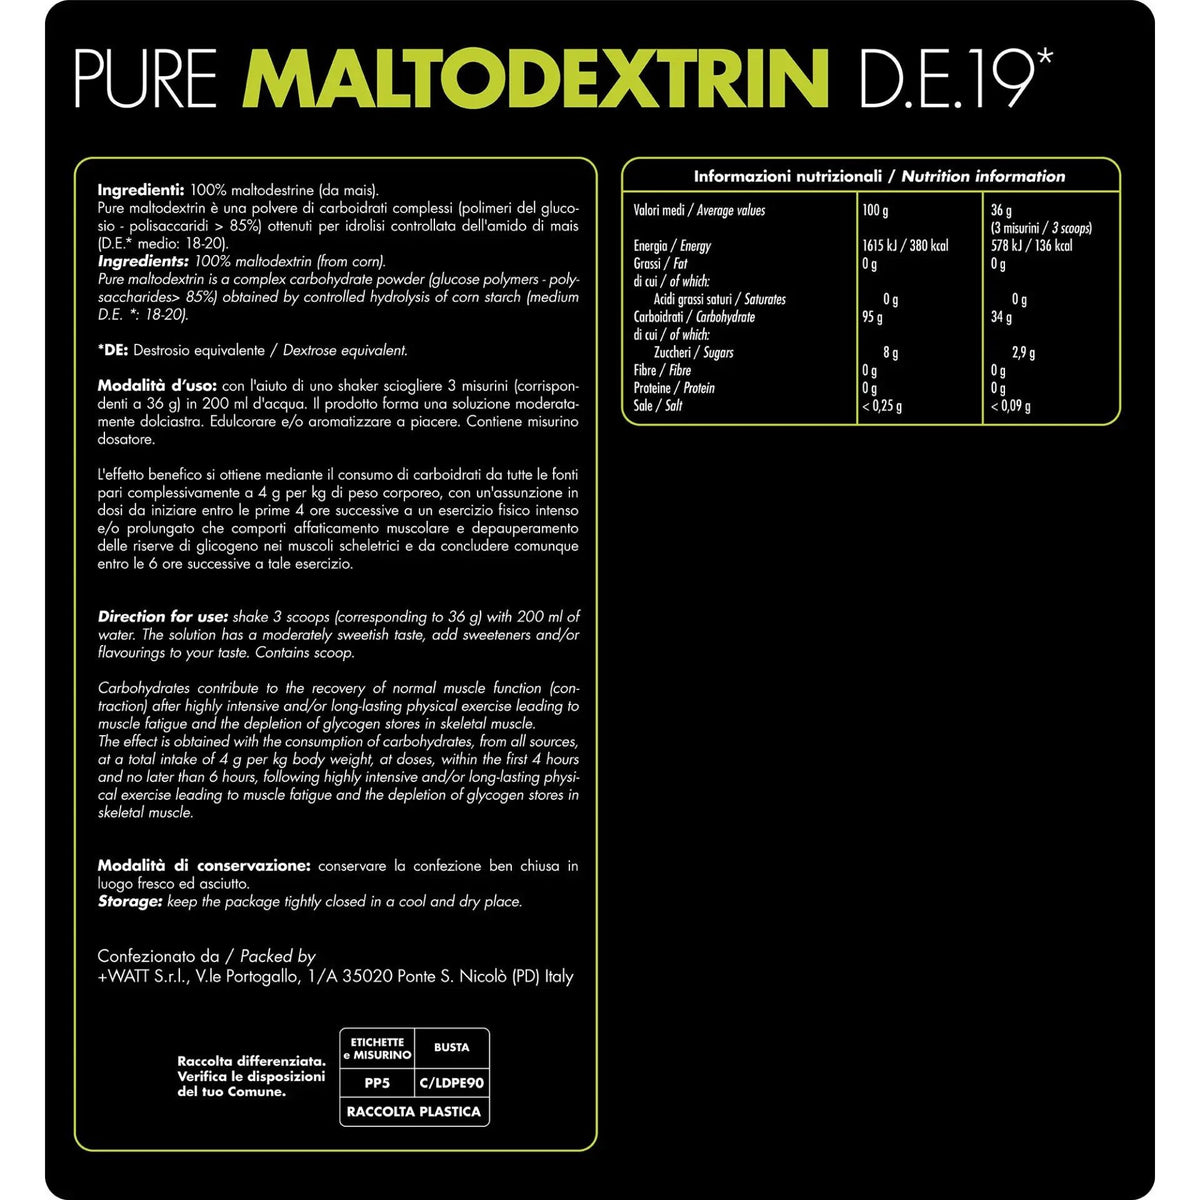 Maltodestrina - Pure Maltodextrin D.E. 19 - +WATT